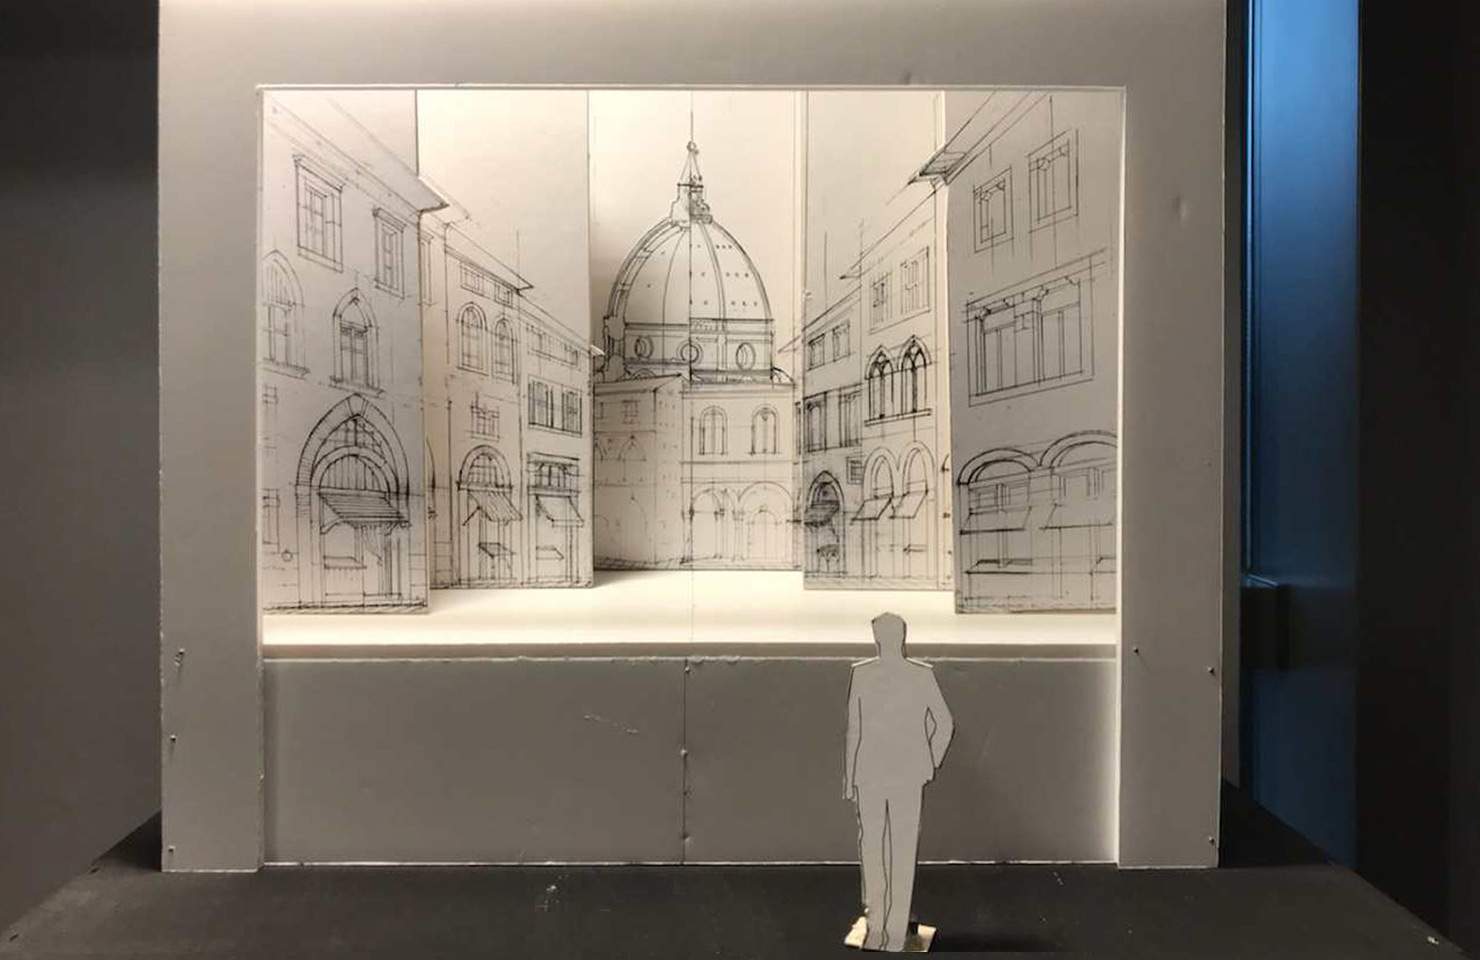 Milan's Salone del Mobile also pays homage to Leonardo da Vinci. With two immersive installations